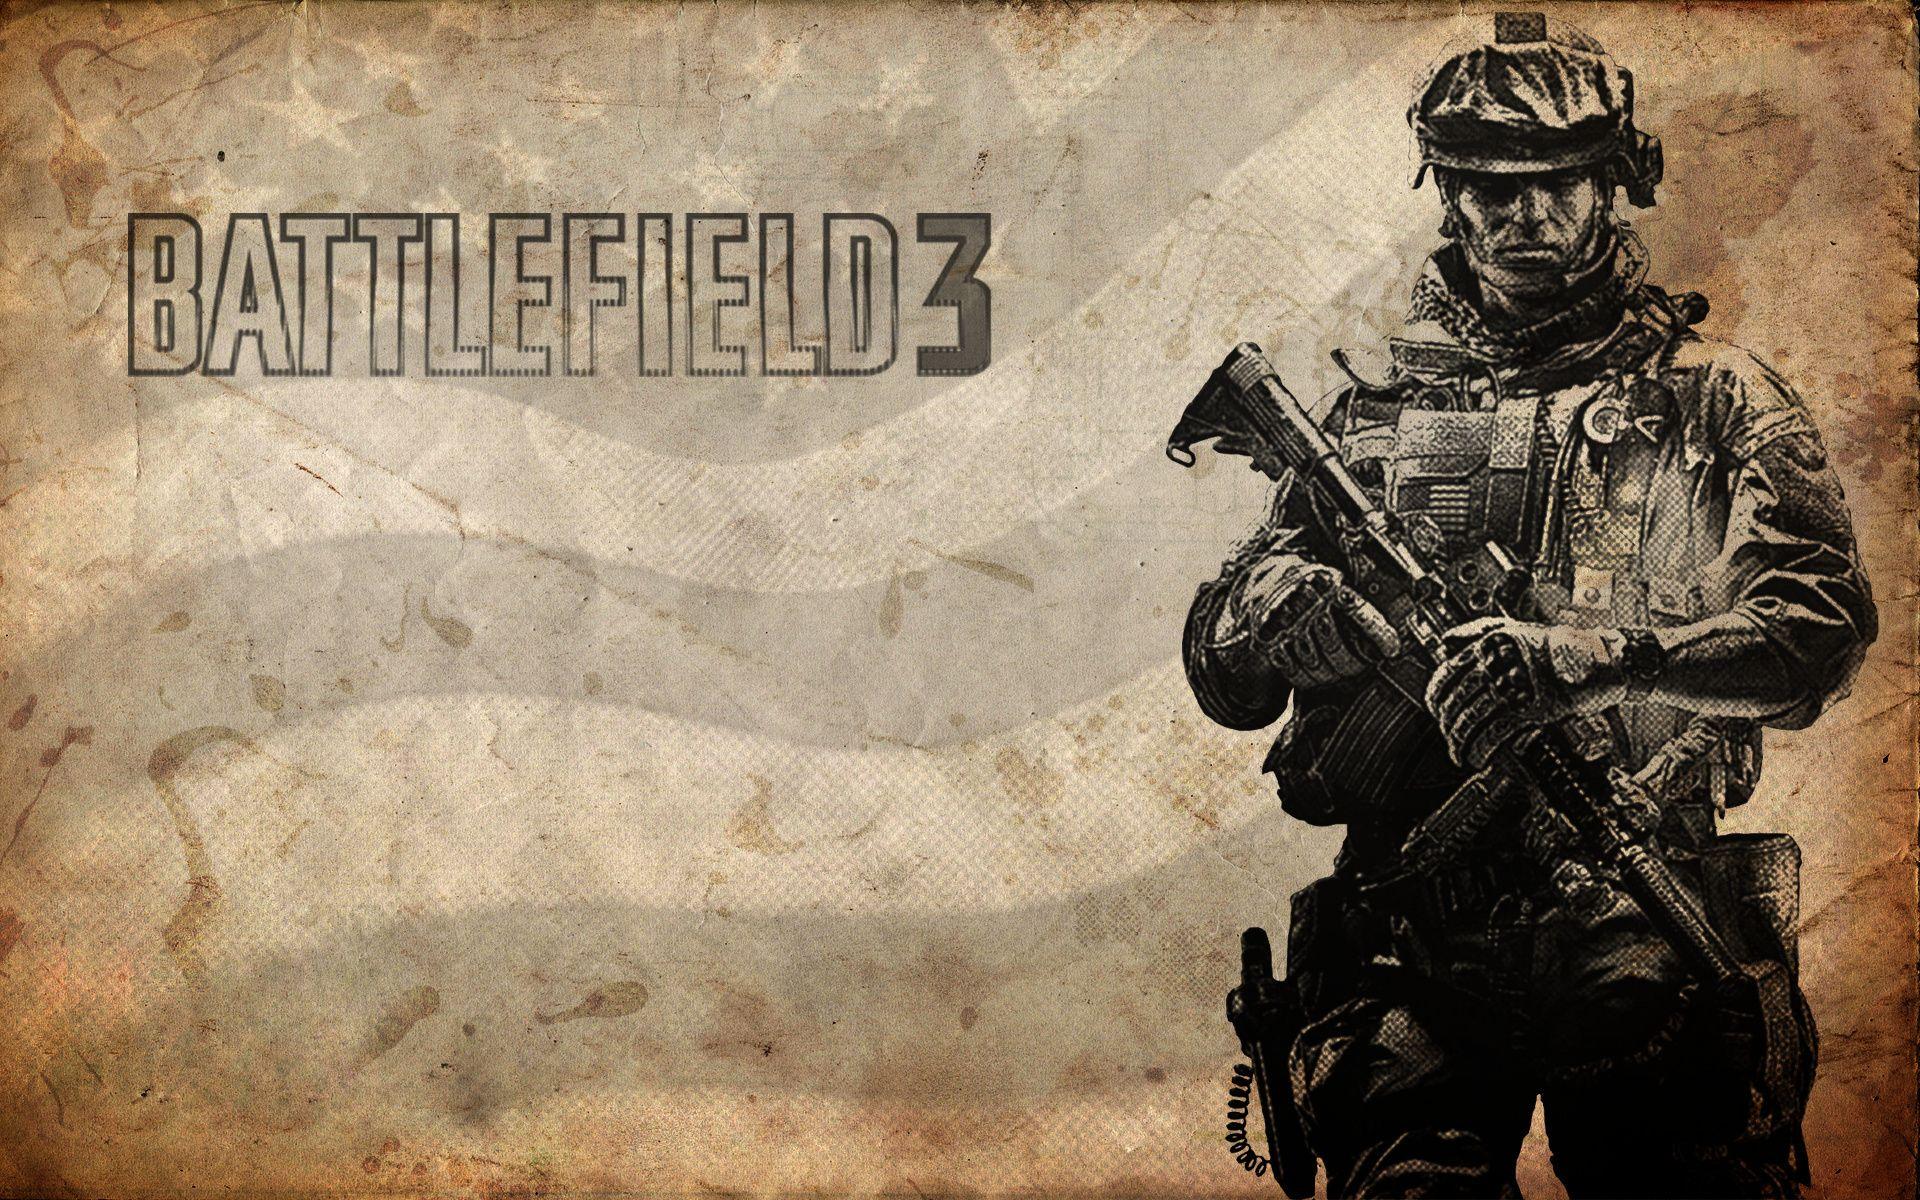 Download wallpaper: battlefield 3 wallappers, wallpaper for desktop